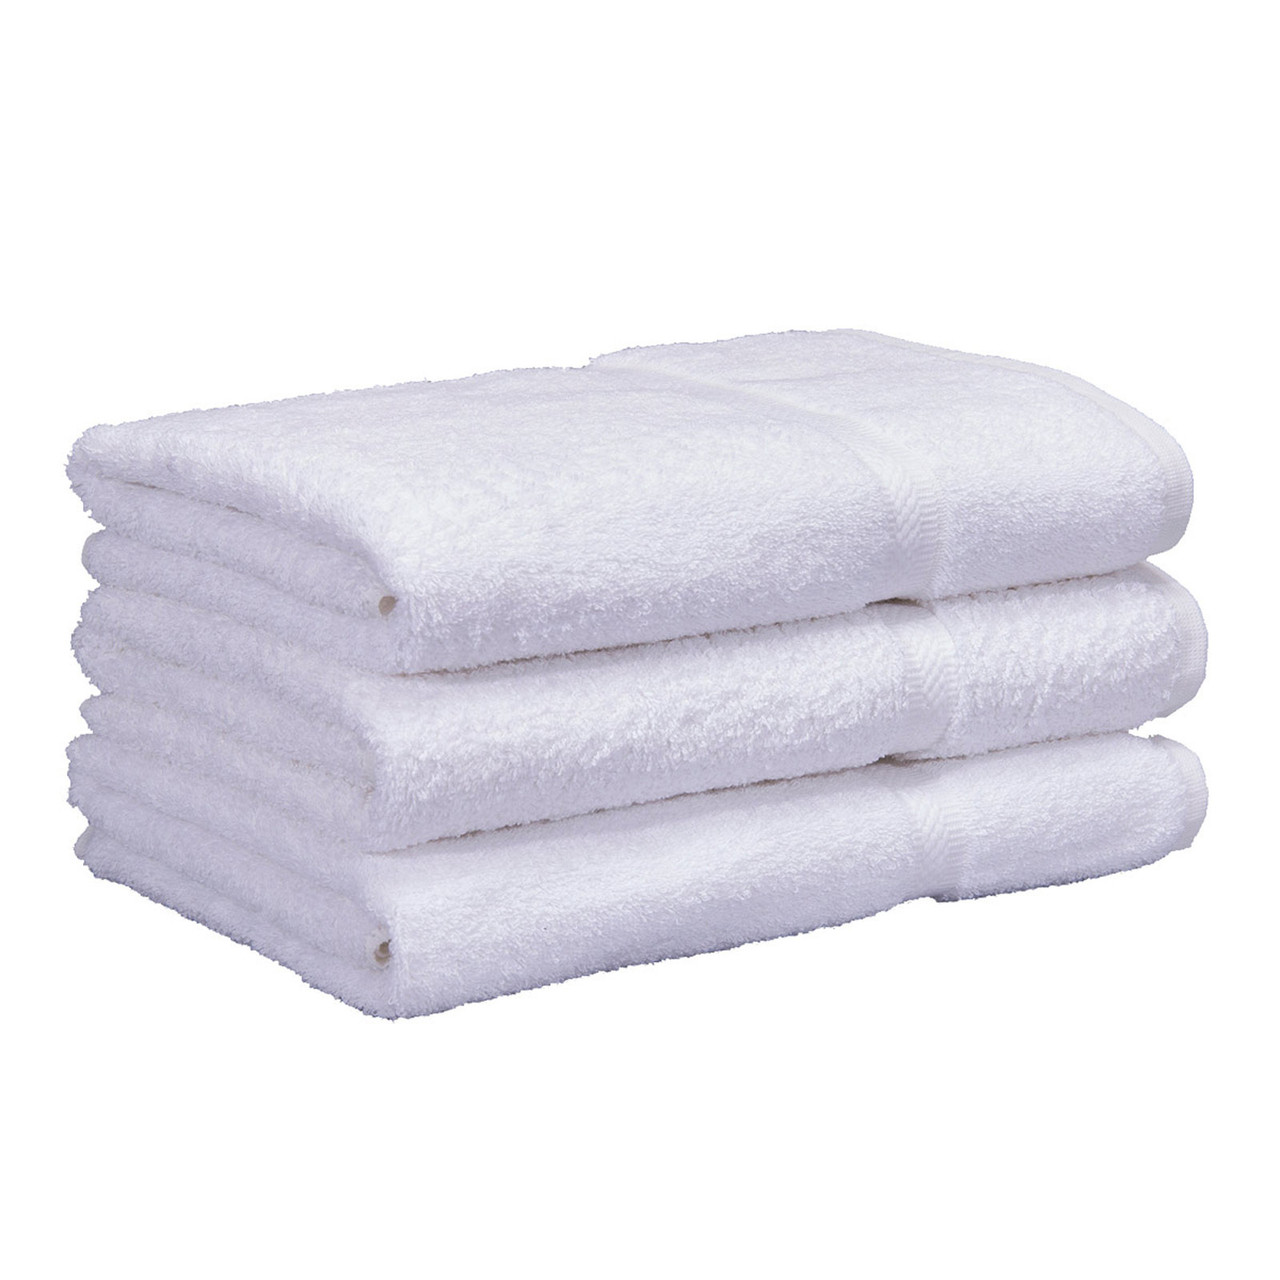 https://cdn11.bigcommerce.com/s-a5uwe4c7wz/images/stencil/1280x1280/products/496/1826/Bath-Towels-Cotton-Terry-25x52-Slight-Irregulars-White__49596.1587156406.jpg?c=1